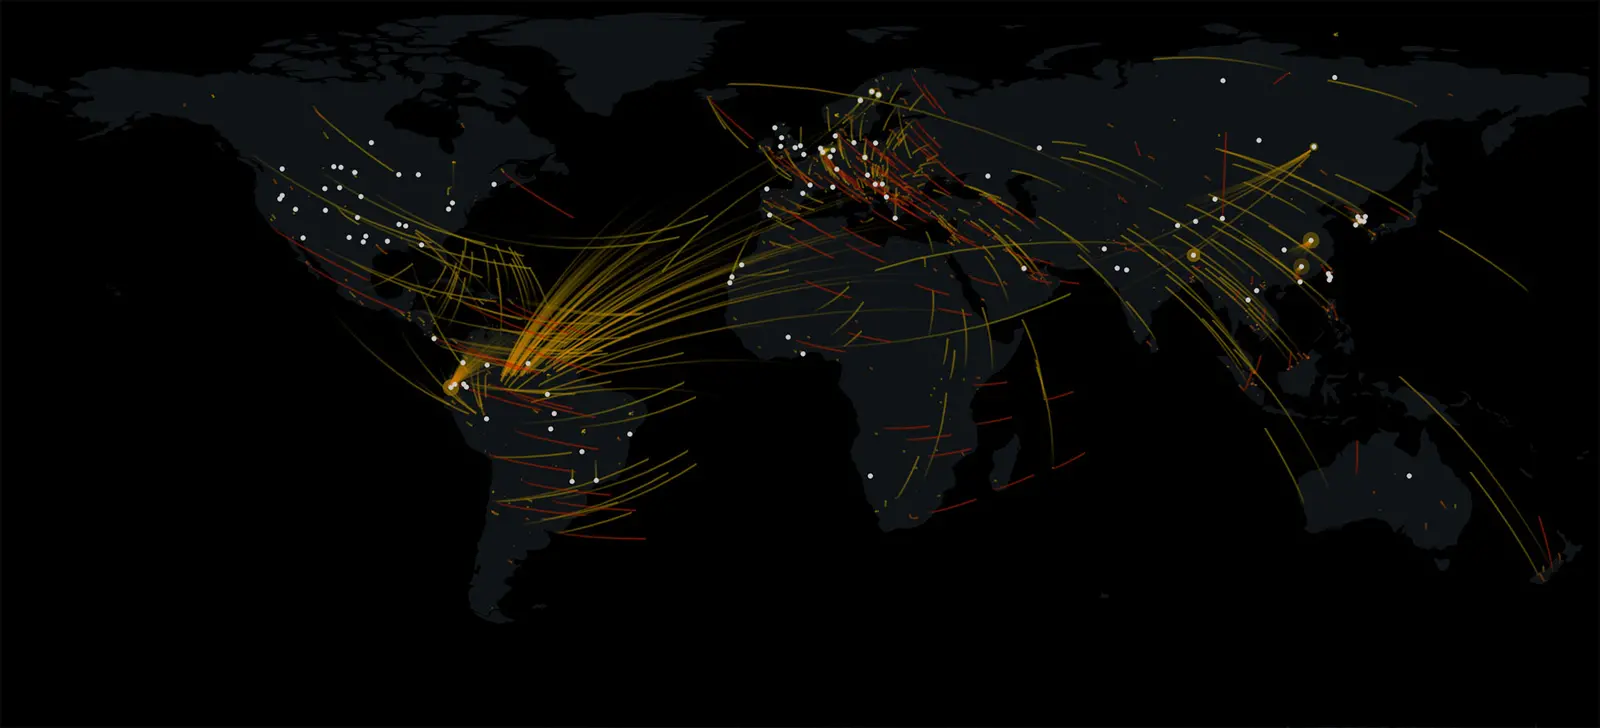 DDoS Attack Map